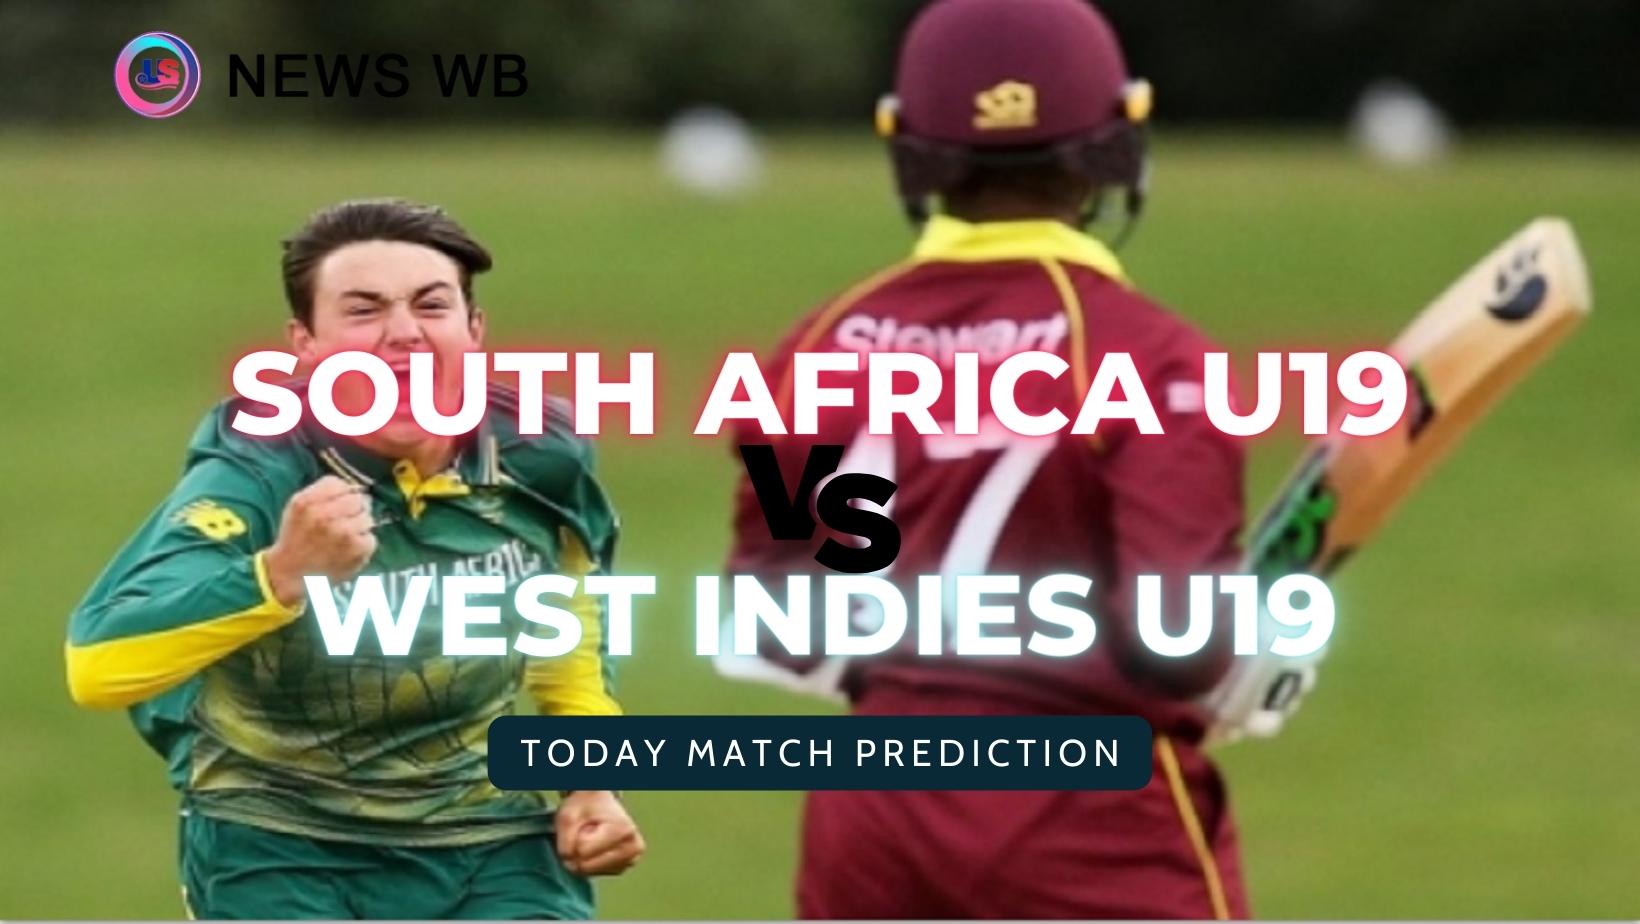 Today Match Prediction: RSA U19 vs WI U19 Dream11 Team, South Africa U19 vs West Indies U19 2nd Match, Group B, Who Will Win?